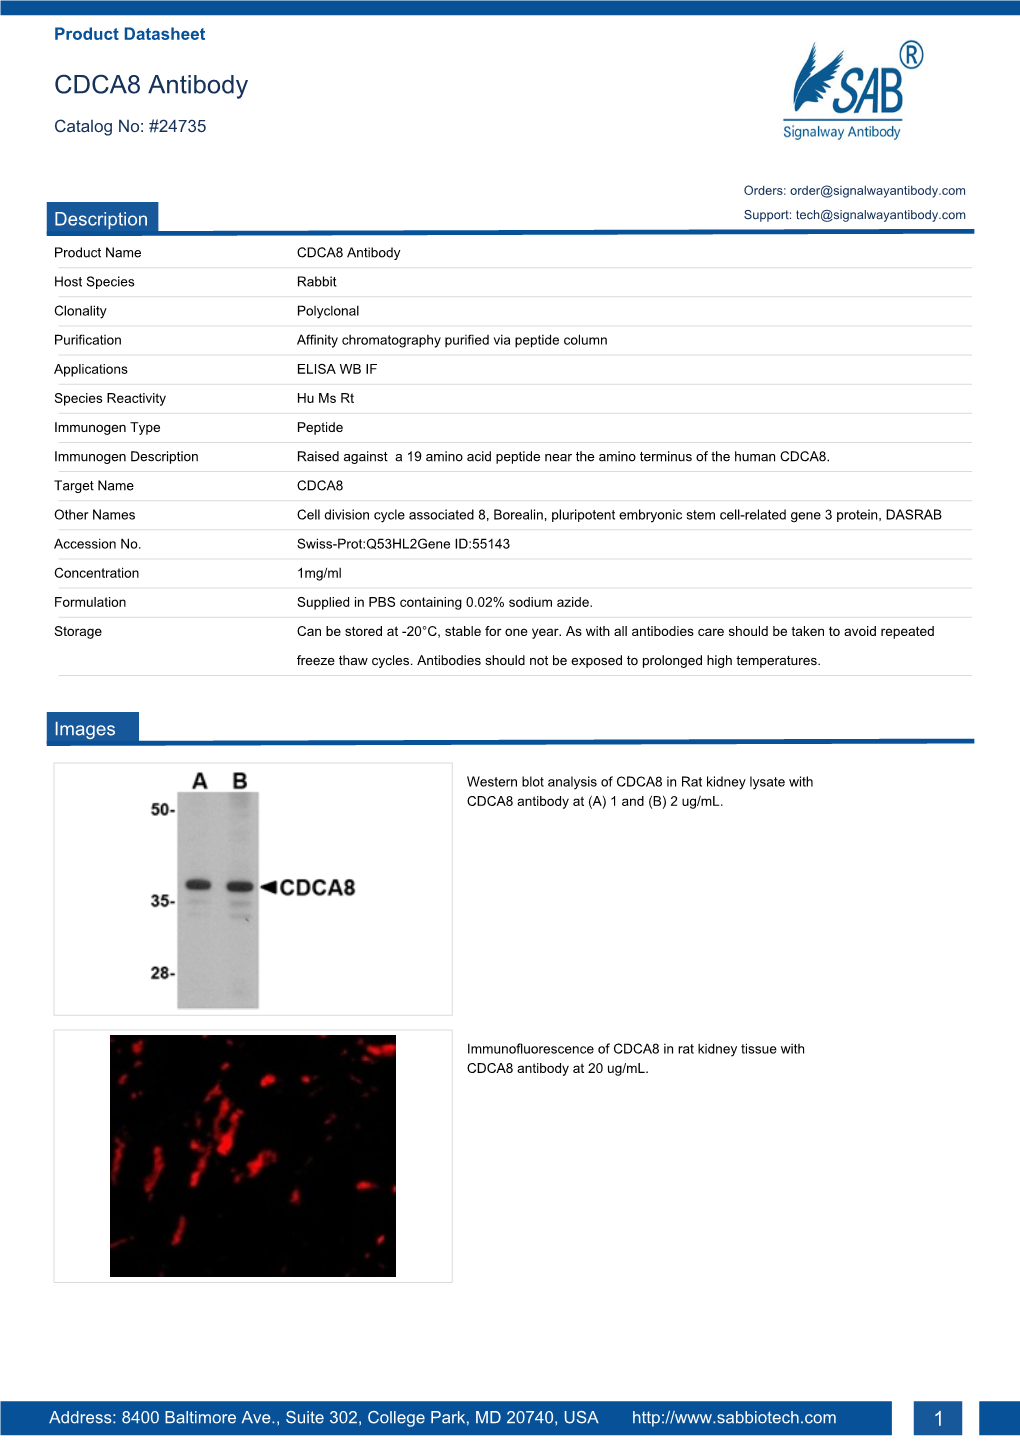 CDCA8 Antibody